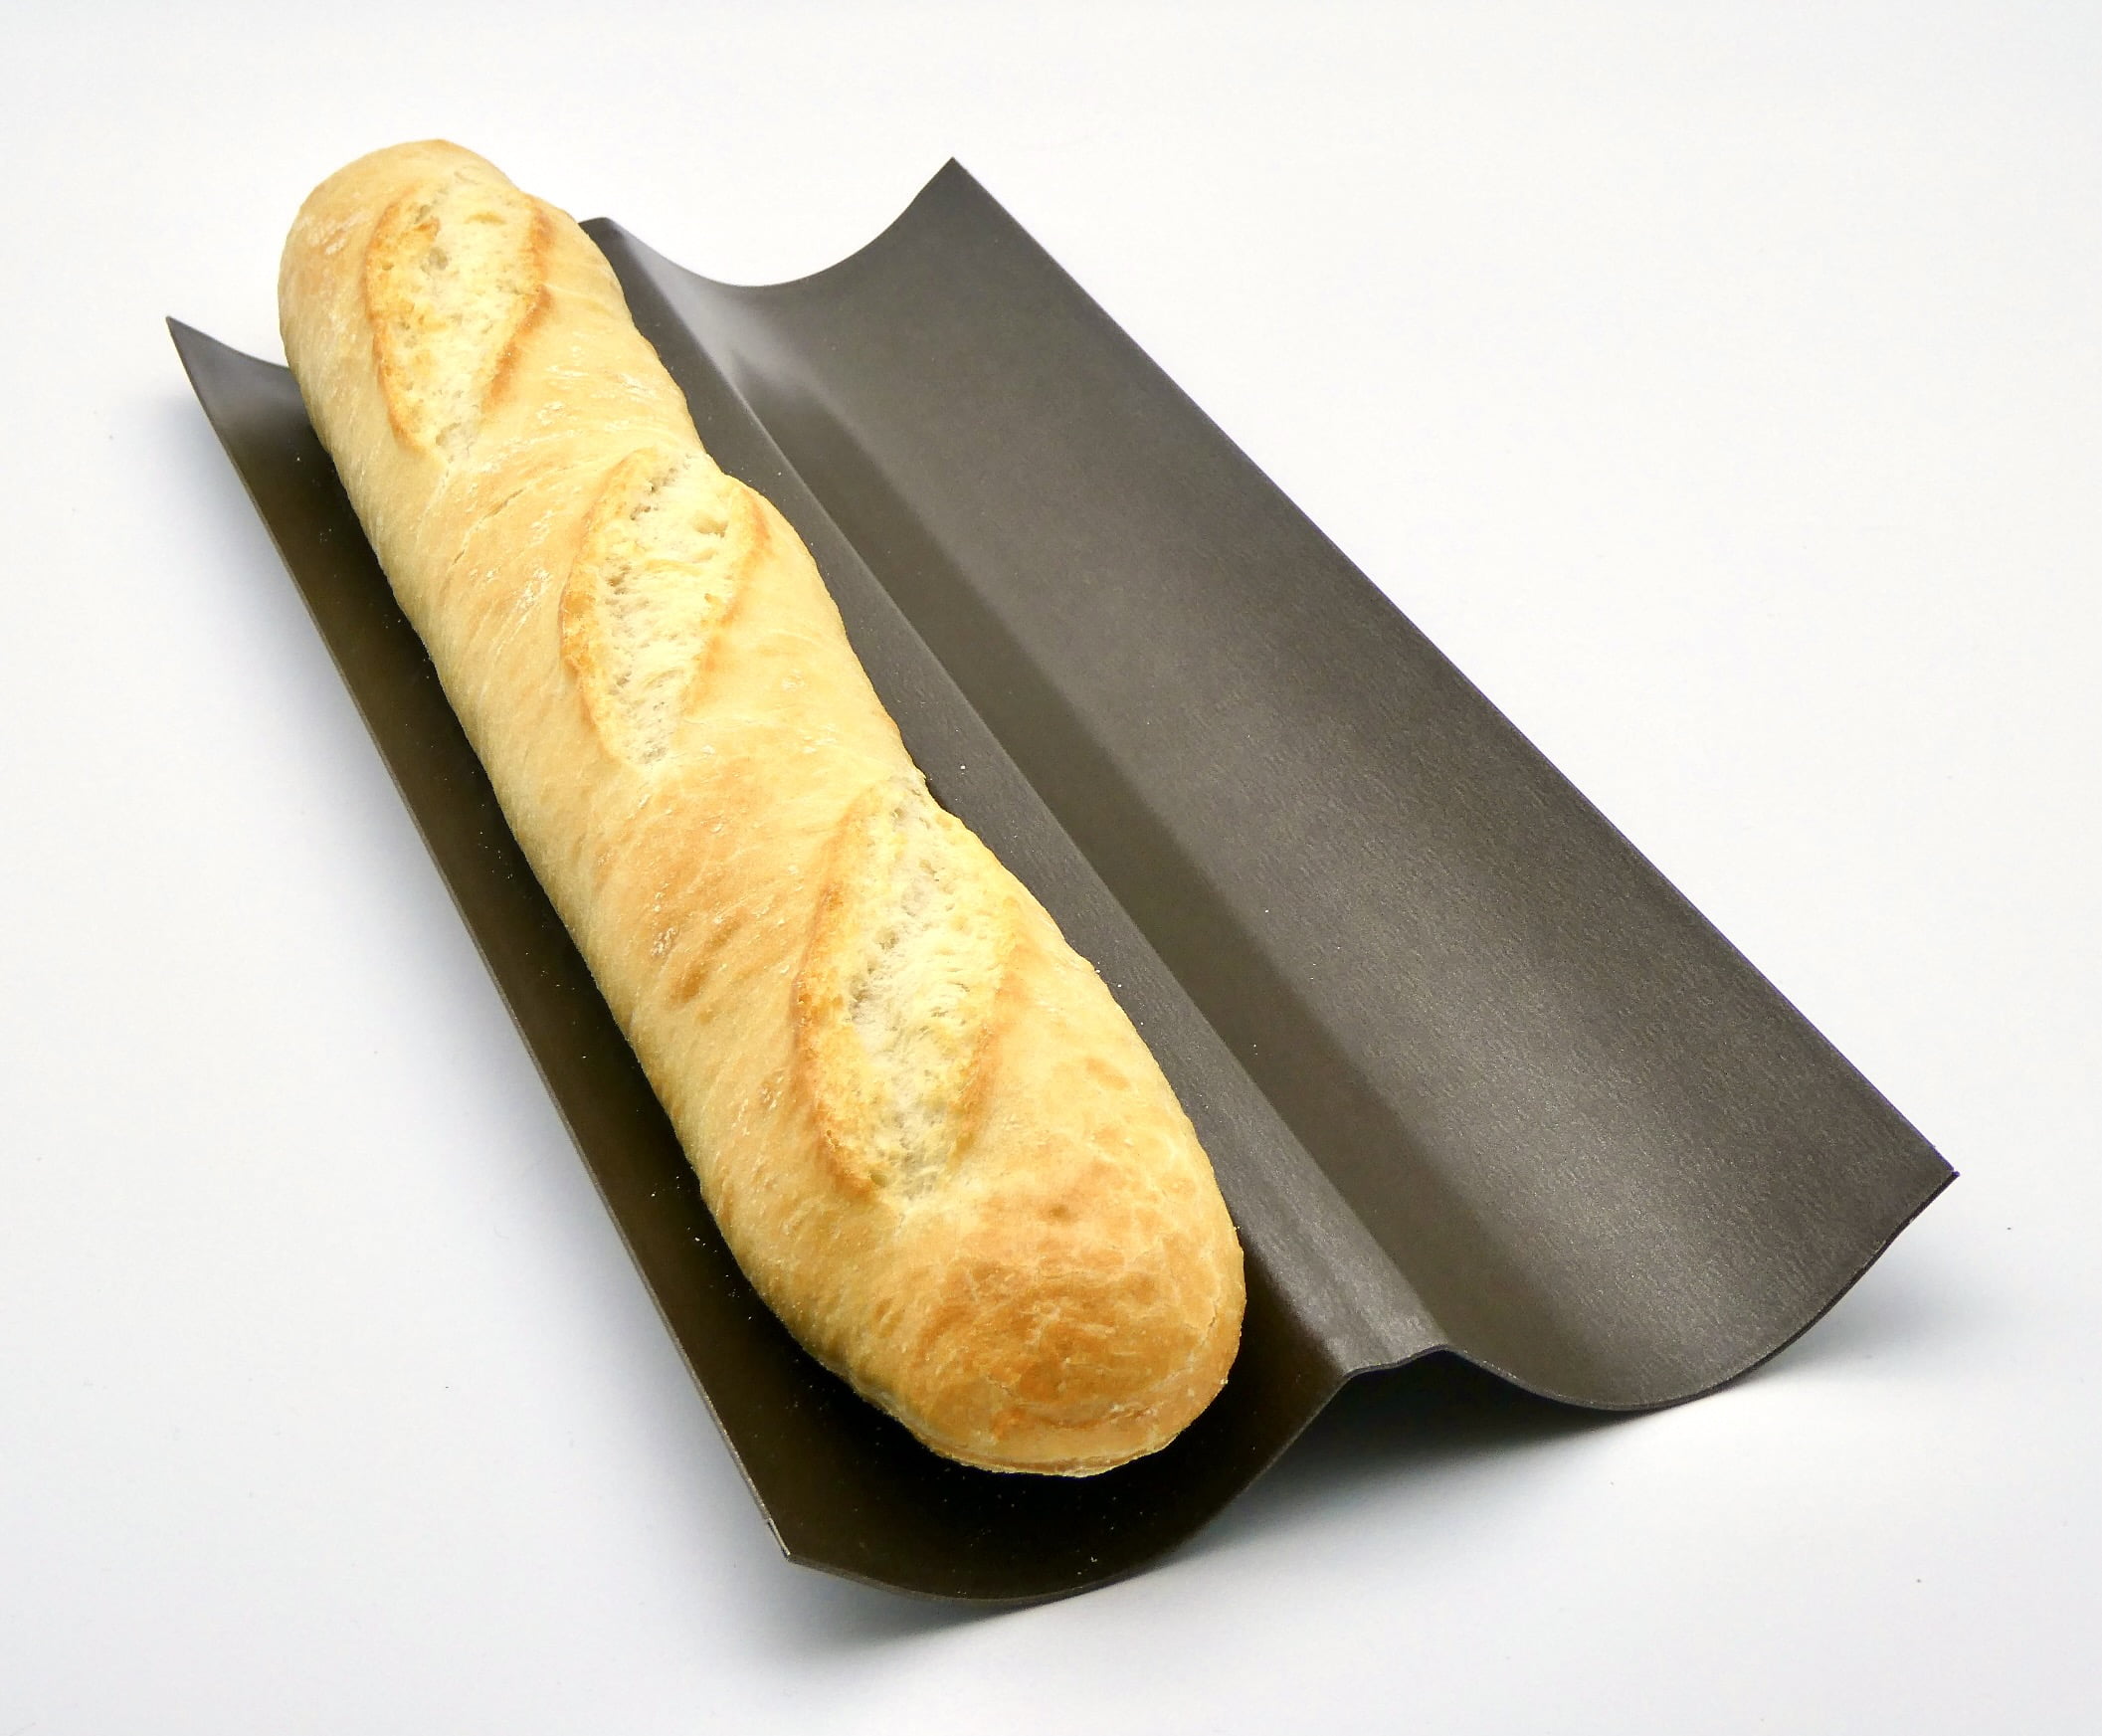  EYHLKM 1-Piece Baguette Baking Pan Round Bread Baking Pan  Baguette Baking Pan Nonstick Bread Baking Pan (Color : C, Size : One) :  Home & Kitchen